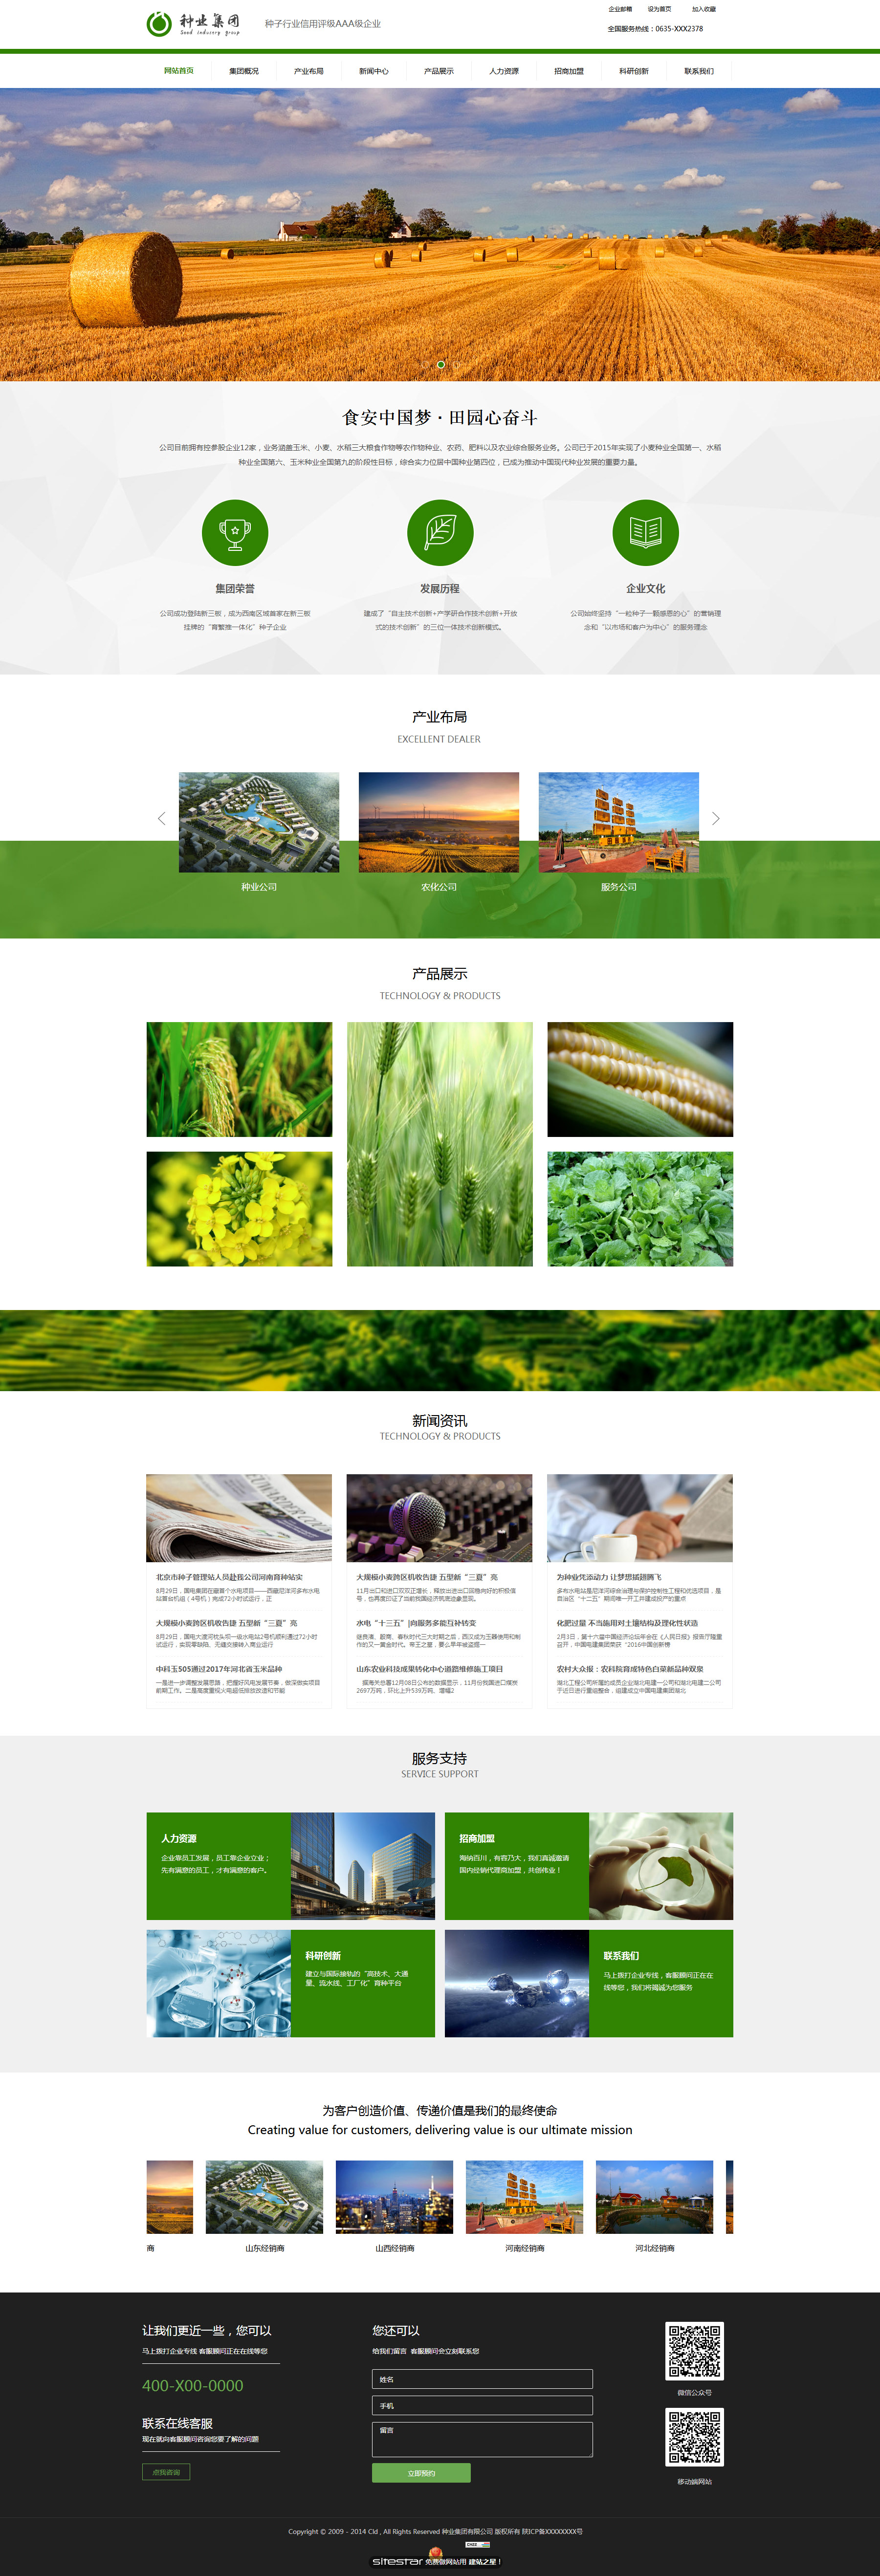 农业网站模板-agriculture-441